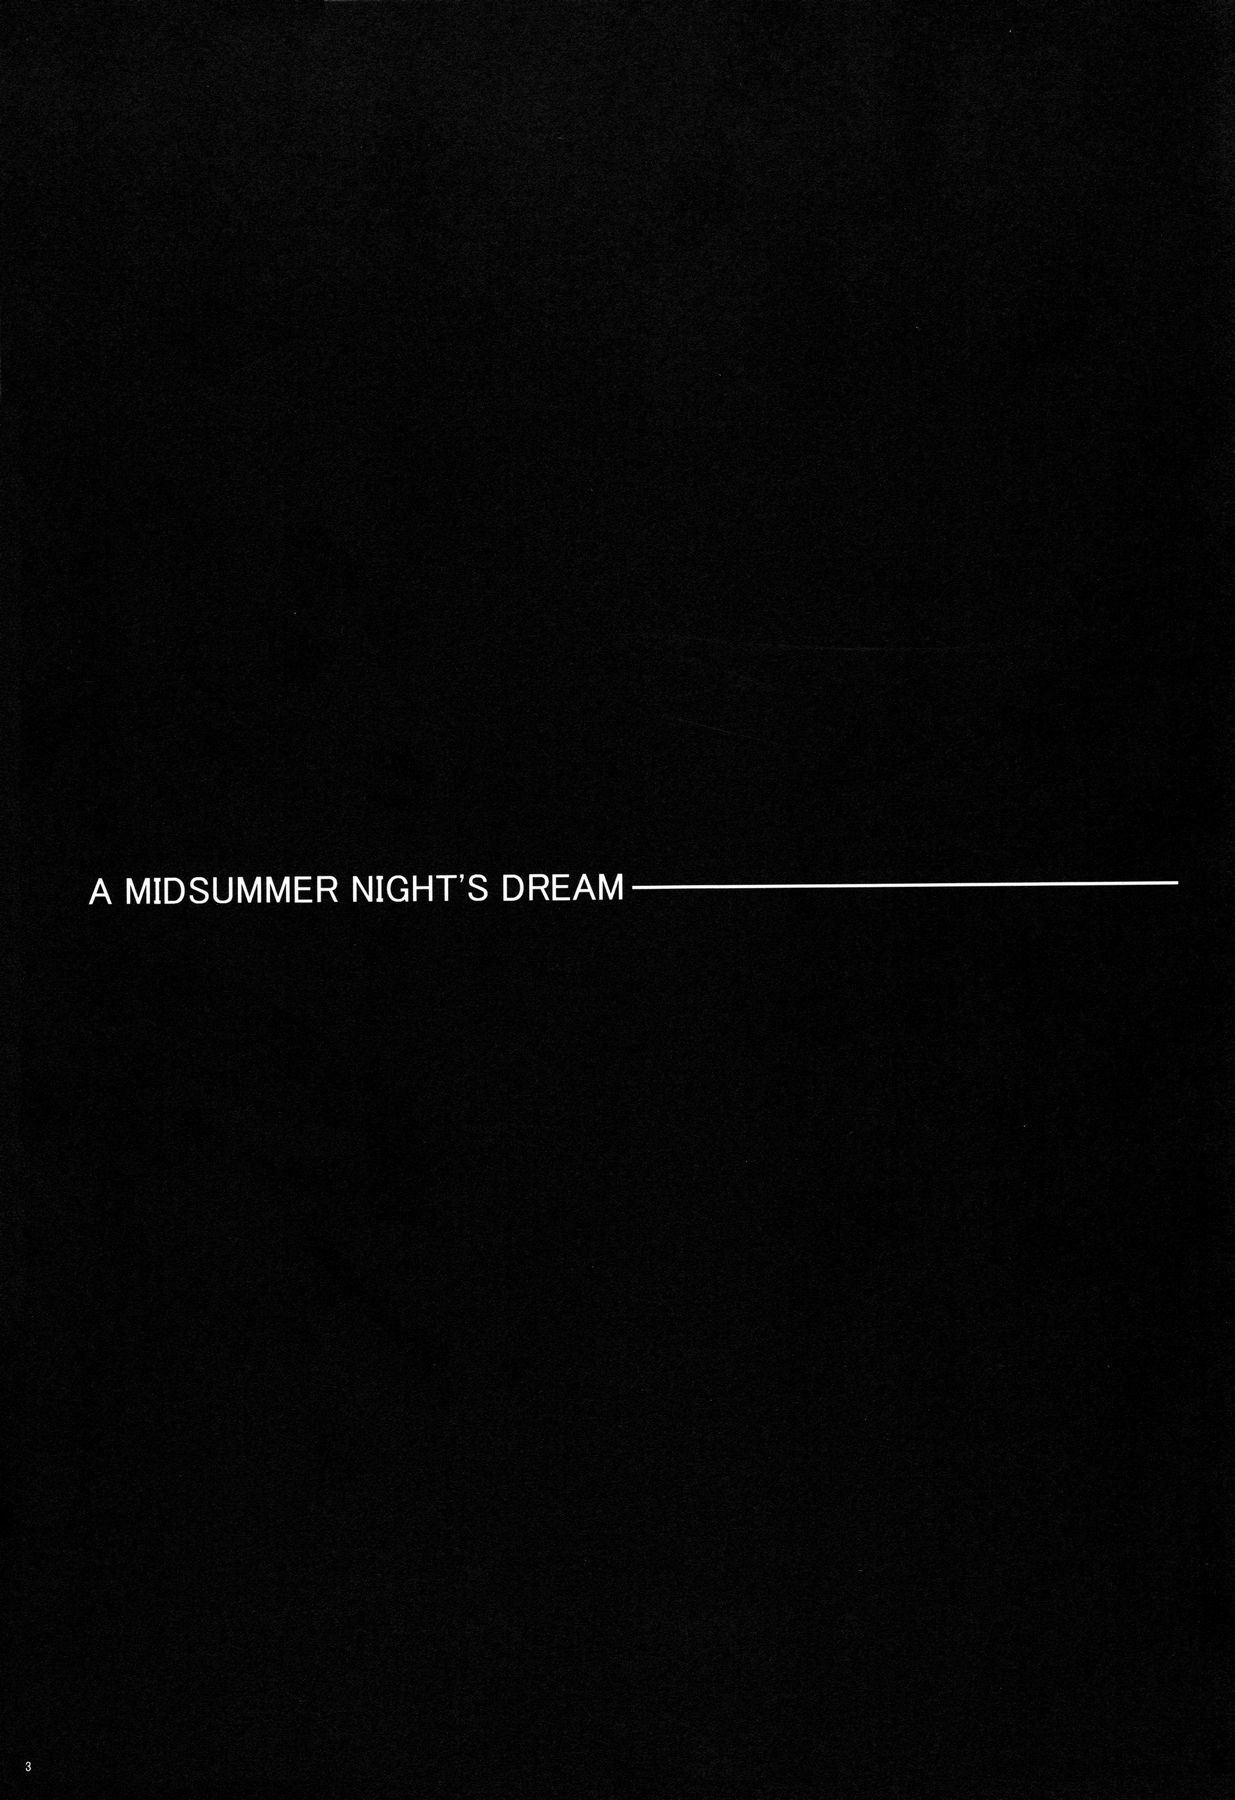 (C74) [BlueBrand (藤丸)] A MIDSUMMER NIGHT'S DREAM